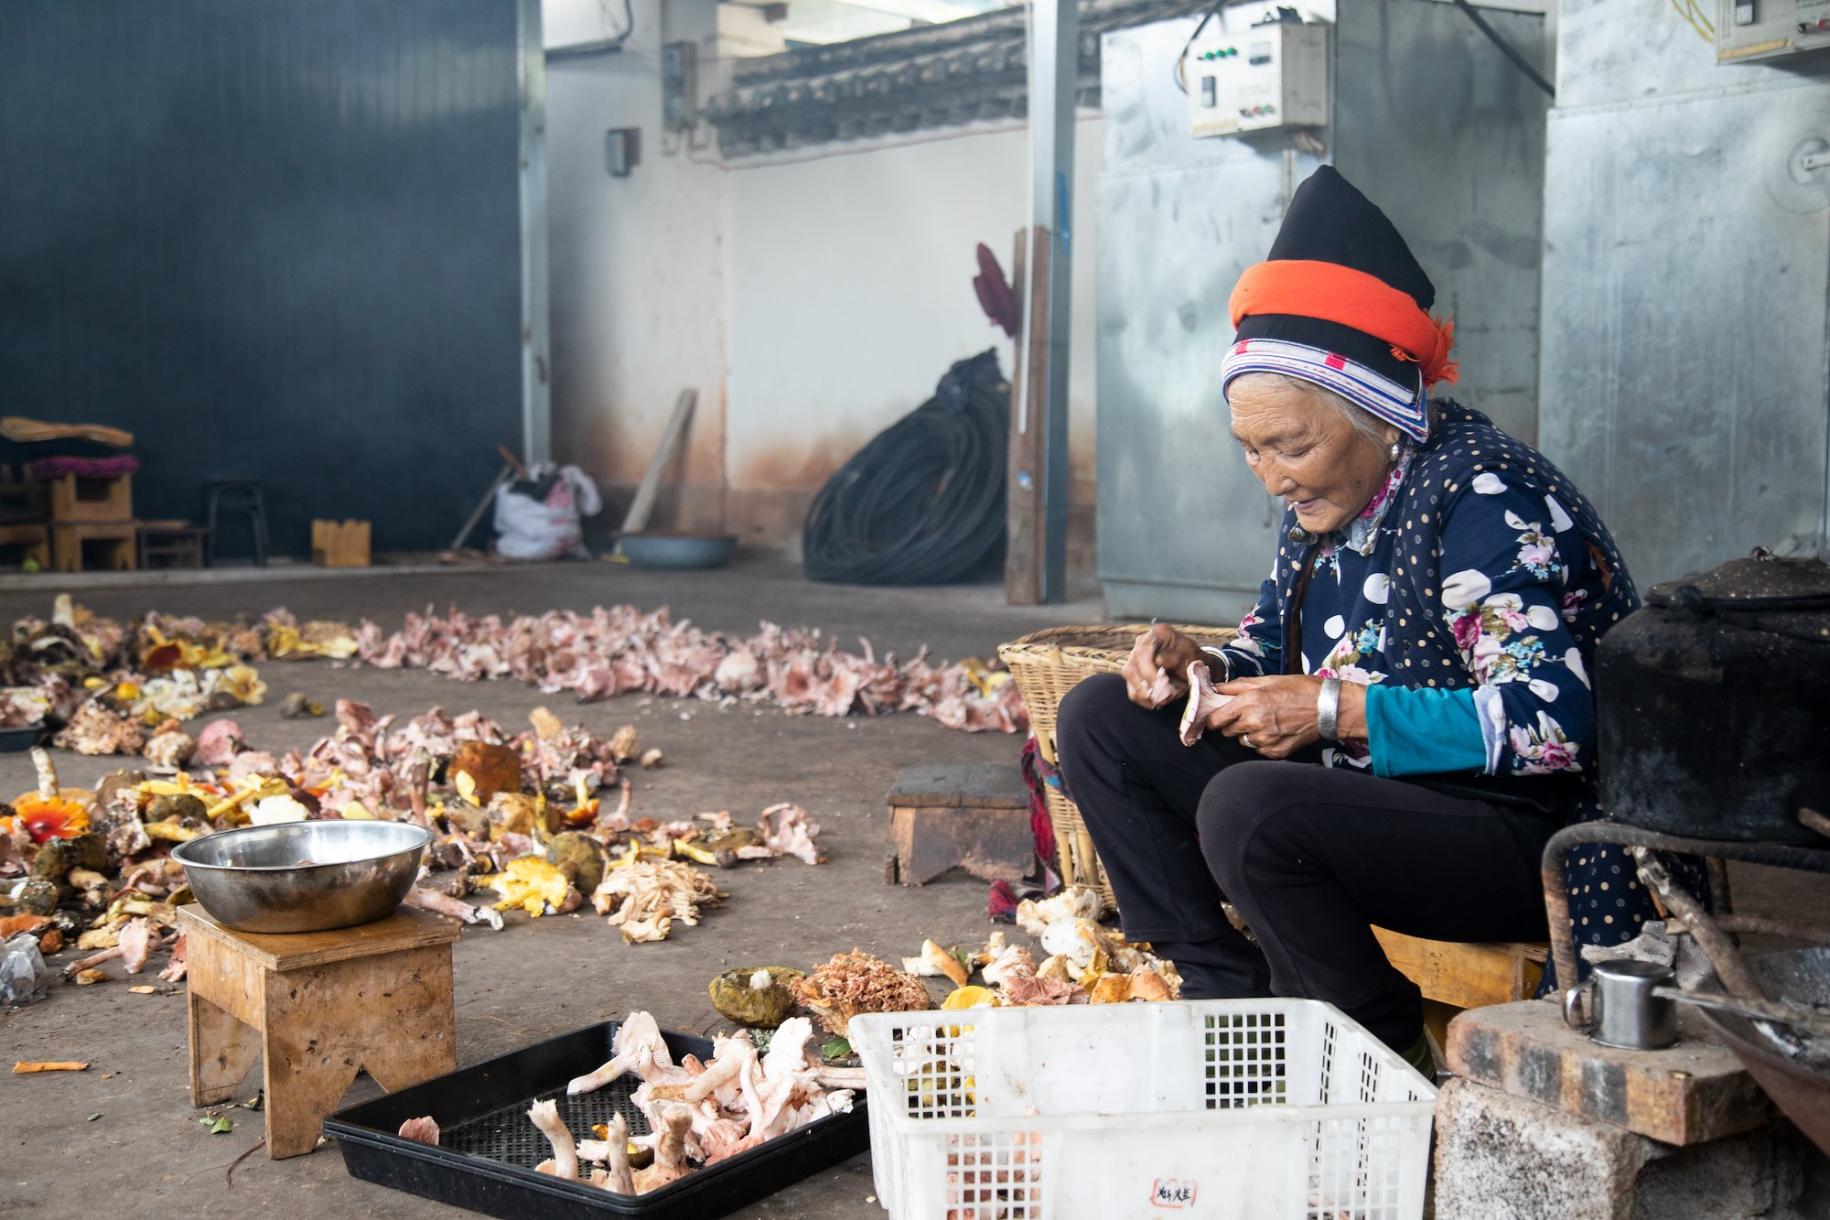 An old woman sorting mushrooms